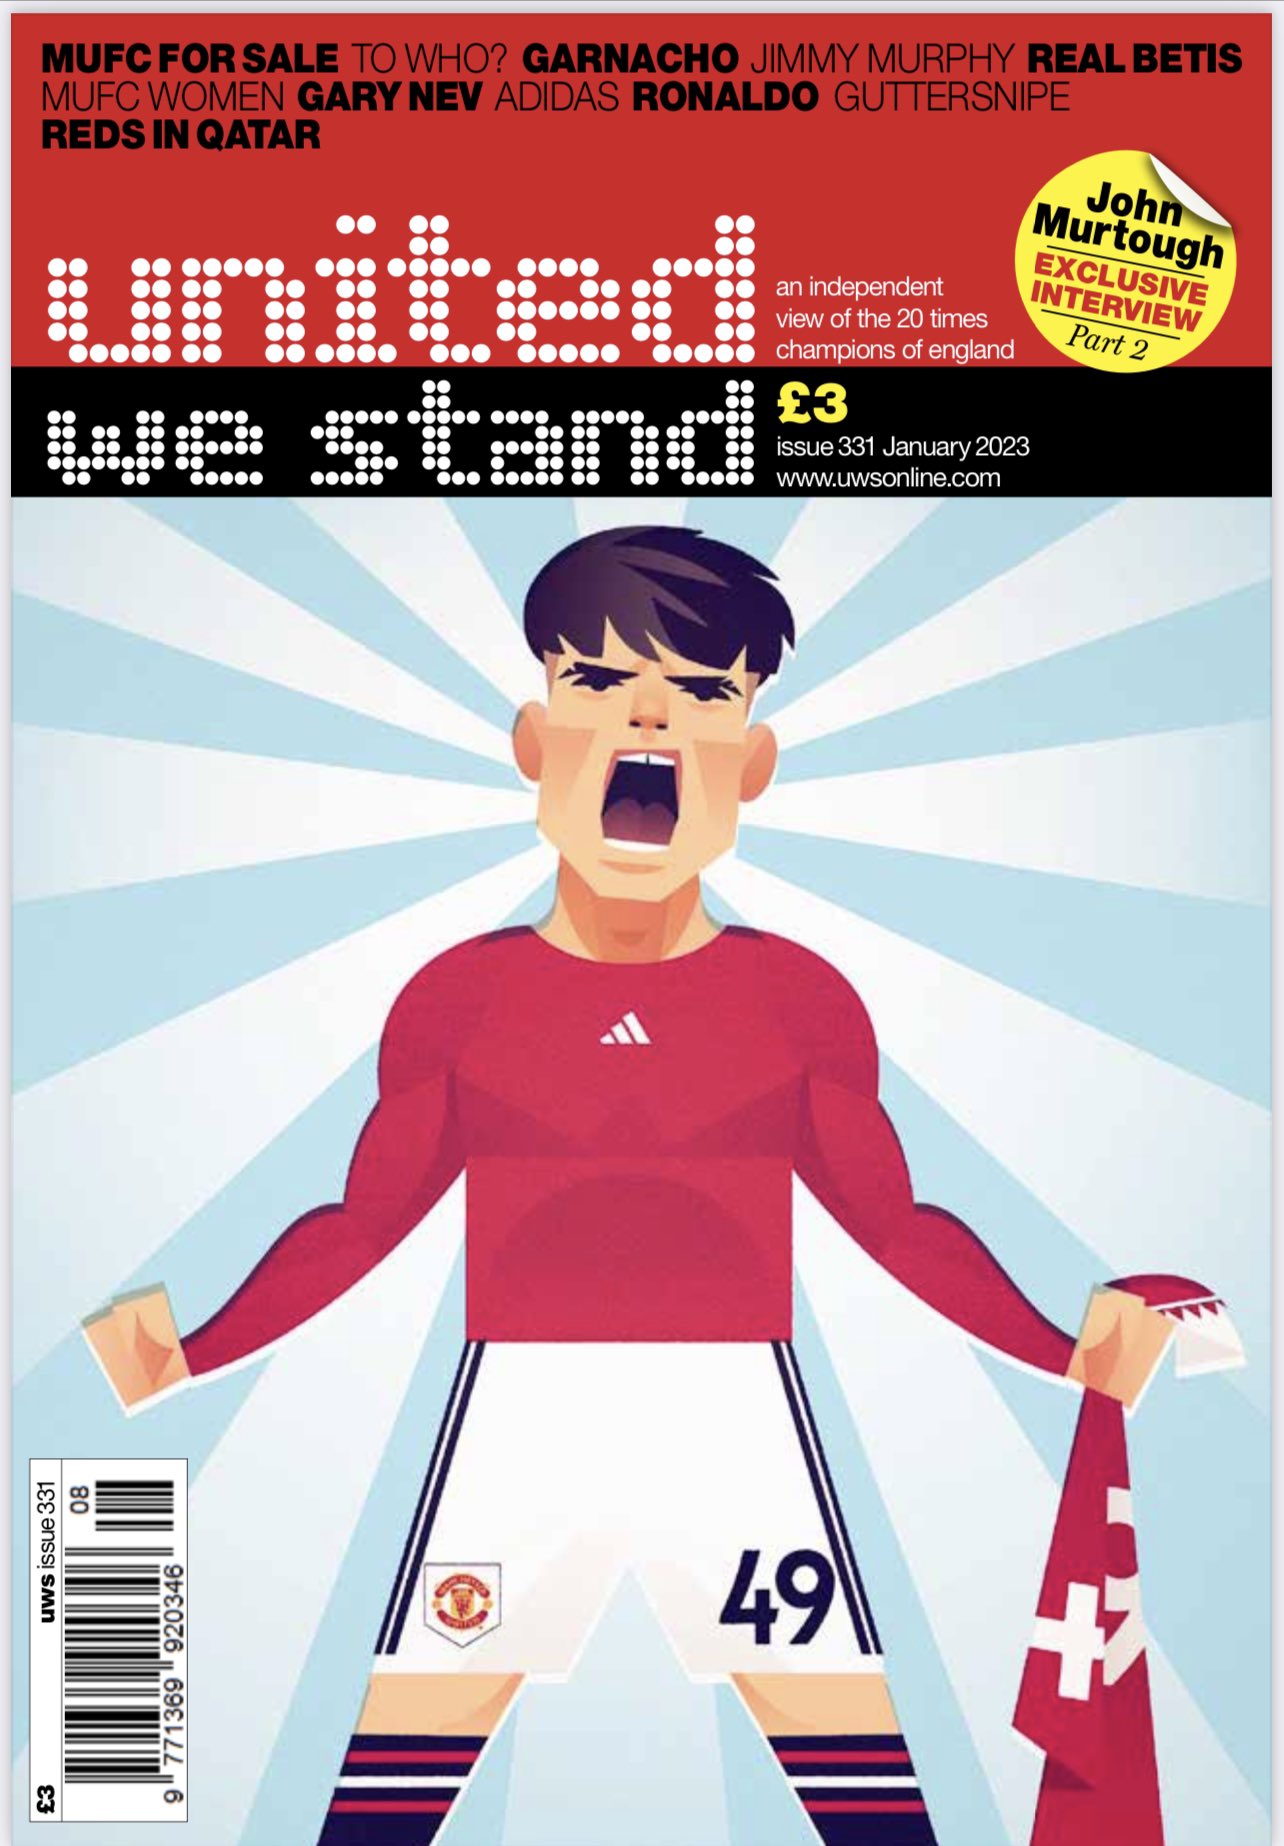 the latest United We Stand fanzine